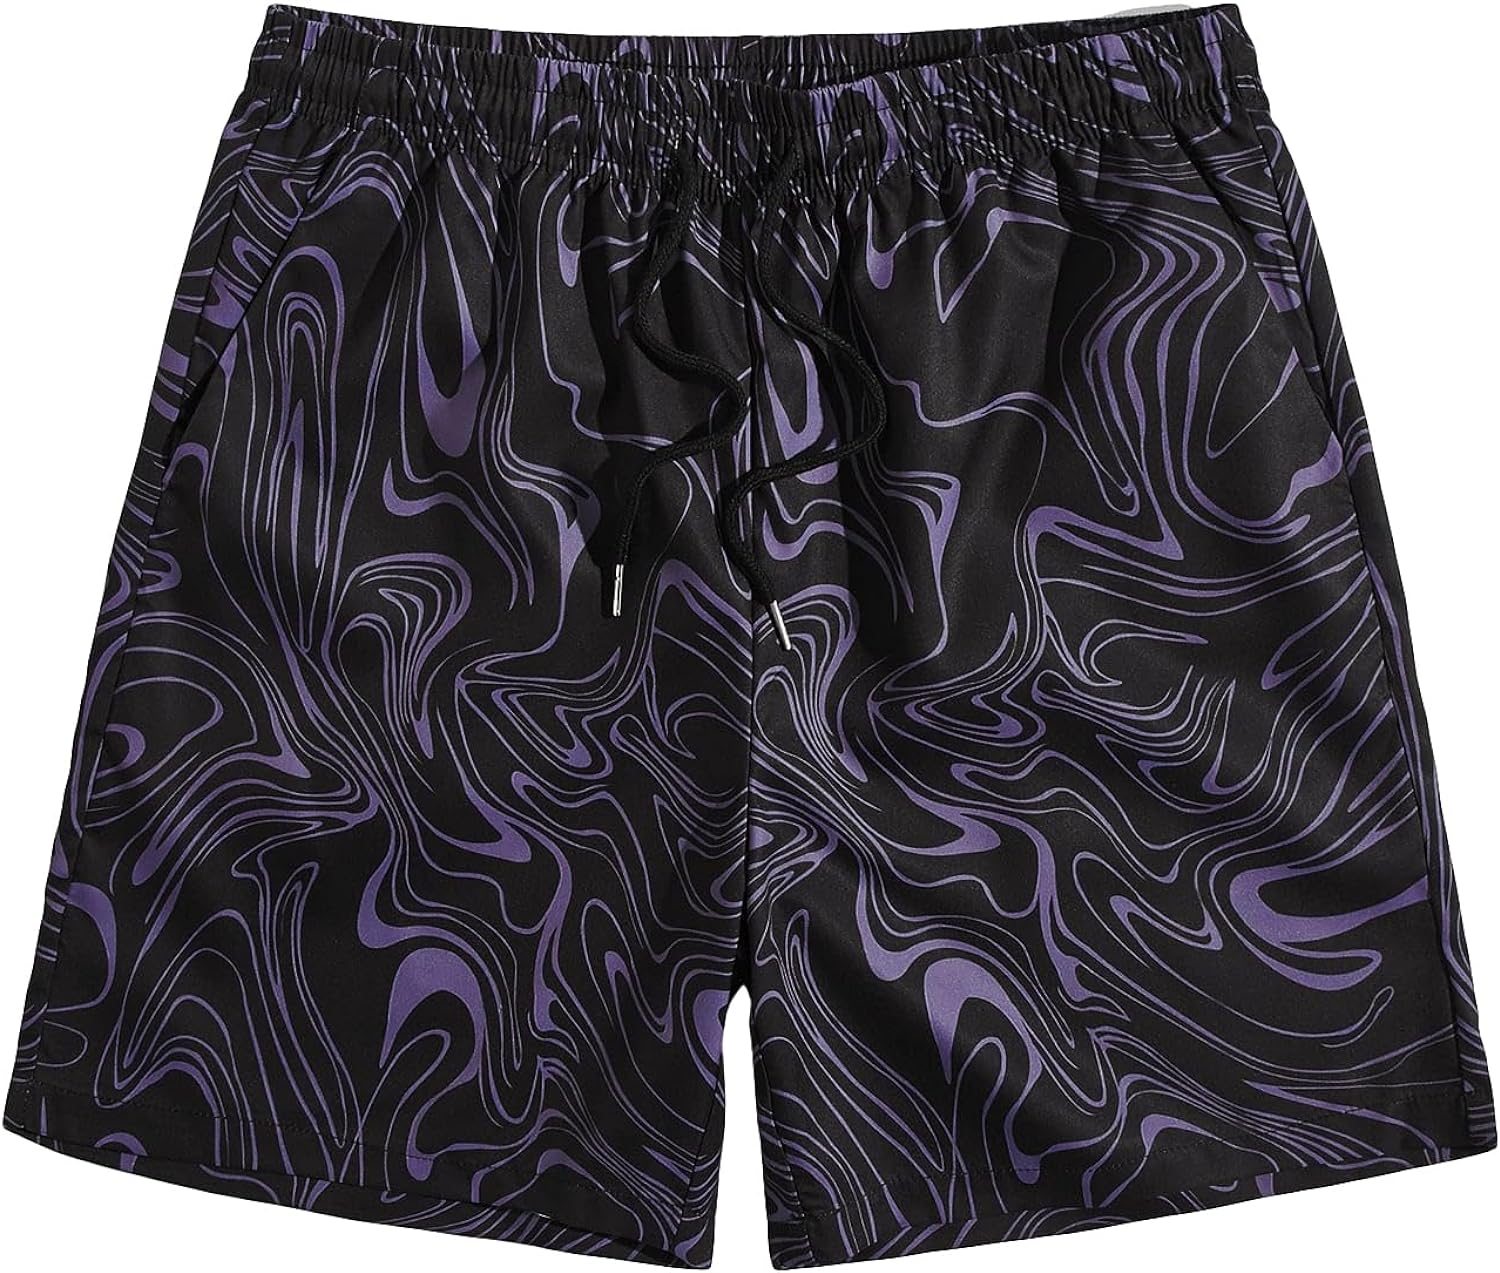 WDIRARA Men's Lightning Graphic Print Drawstring Casual Summer Beach Shorts  Black Chicago Print XS at  Men's Clothing store